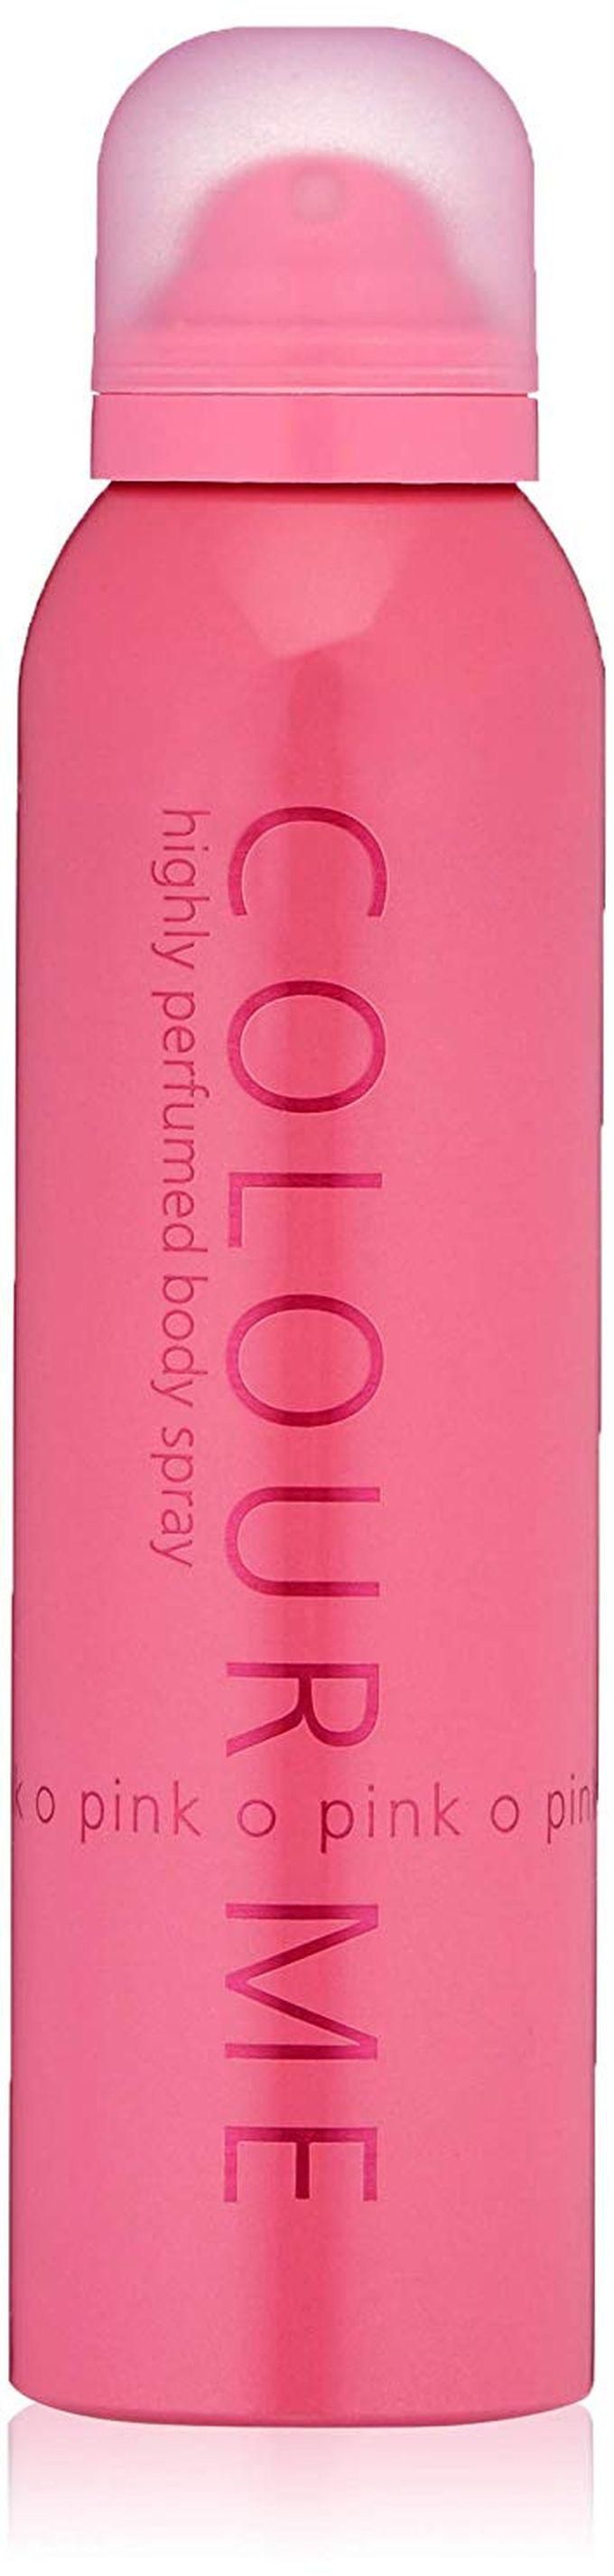 Colour Me Pink Body Spray - For Women - 150Ml